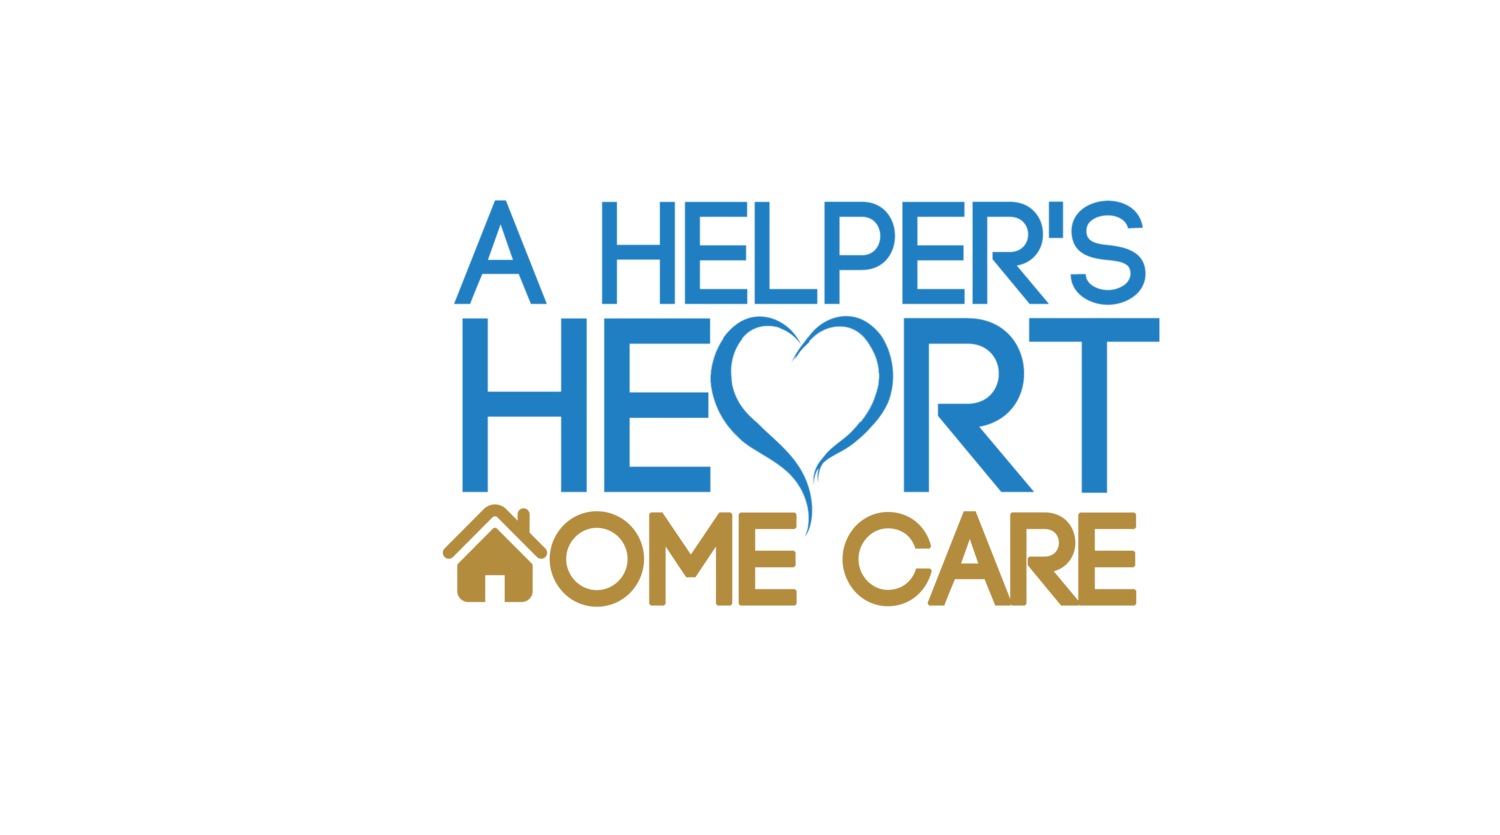 A Helper's Heart Home Care